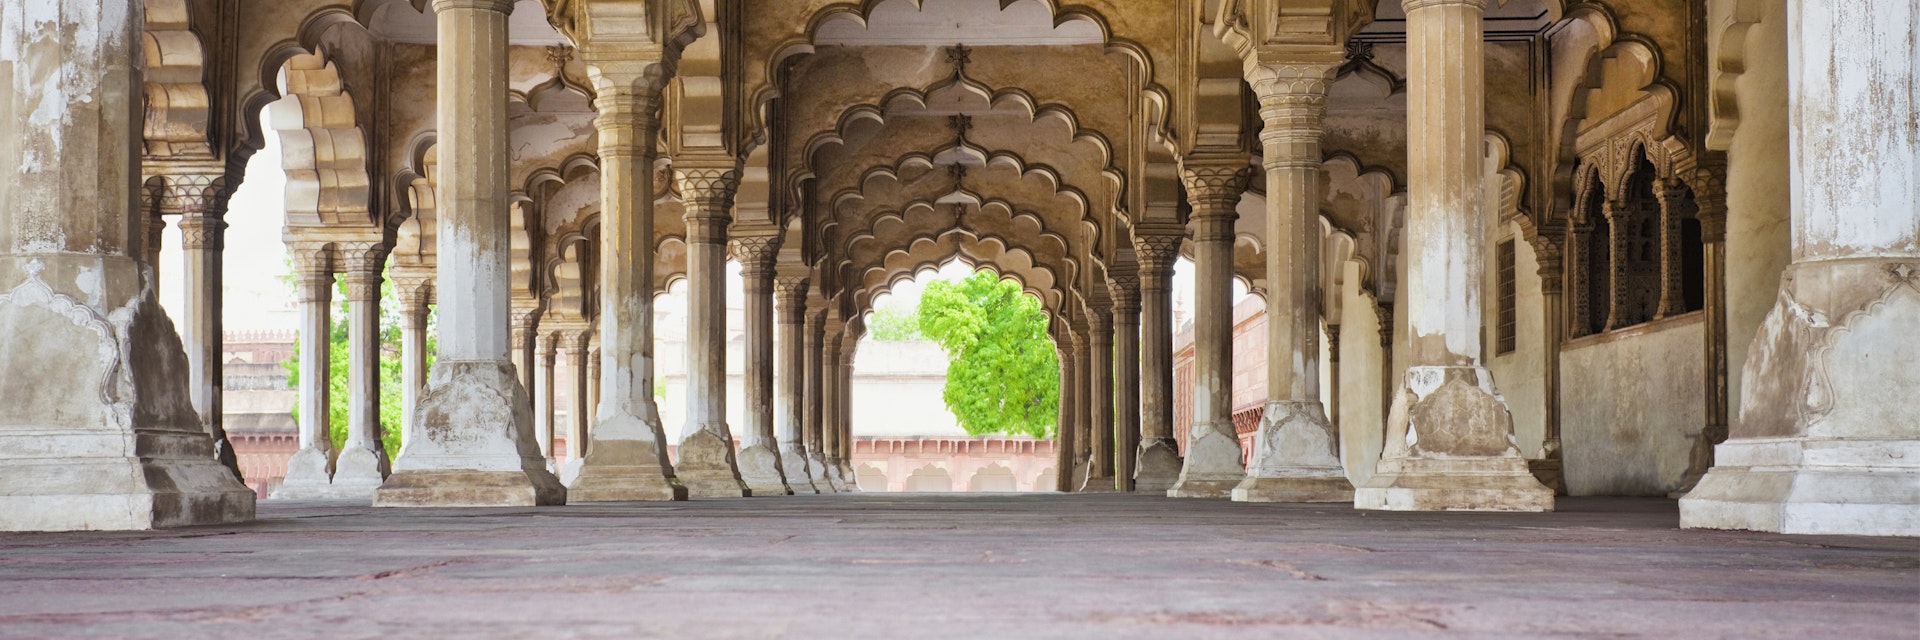 India, Uttar Pradesh, Agra, Agra Fort, Hall of Public Audience